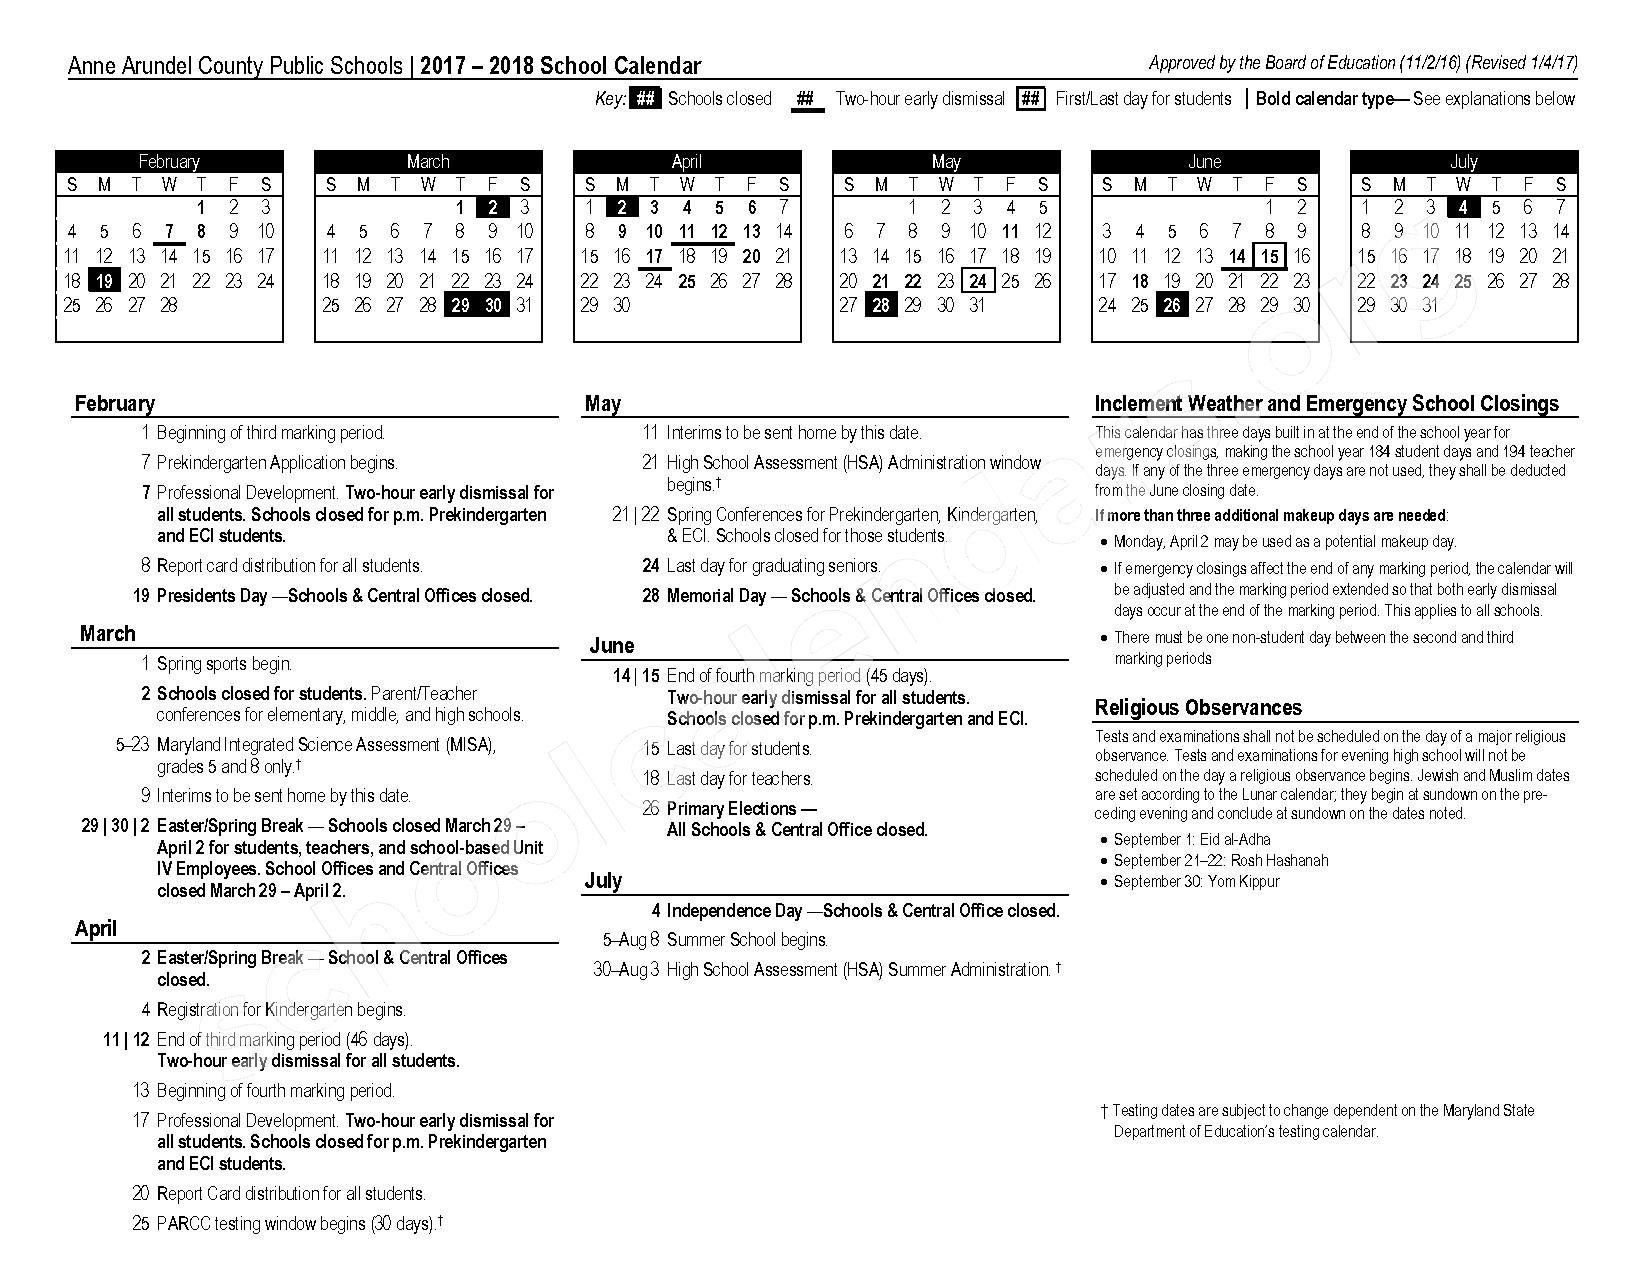 Anne Arundel County School Calendar